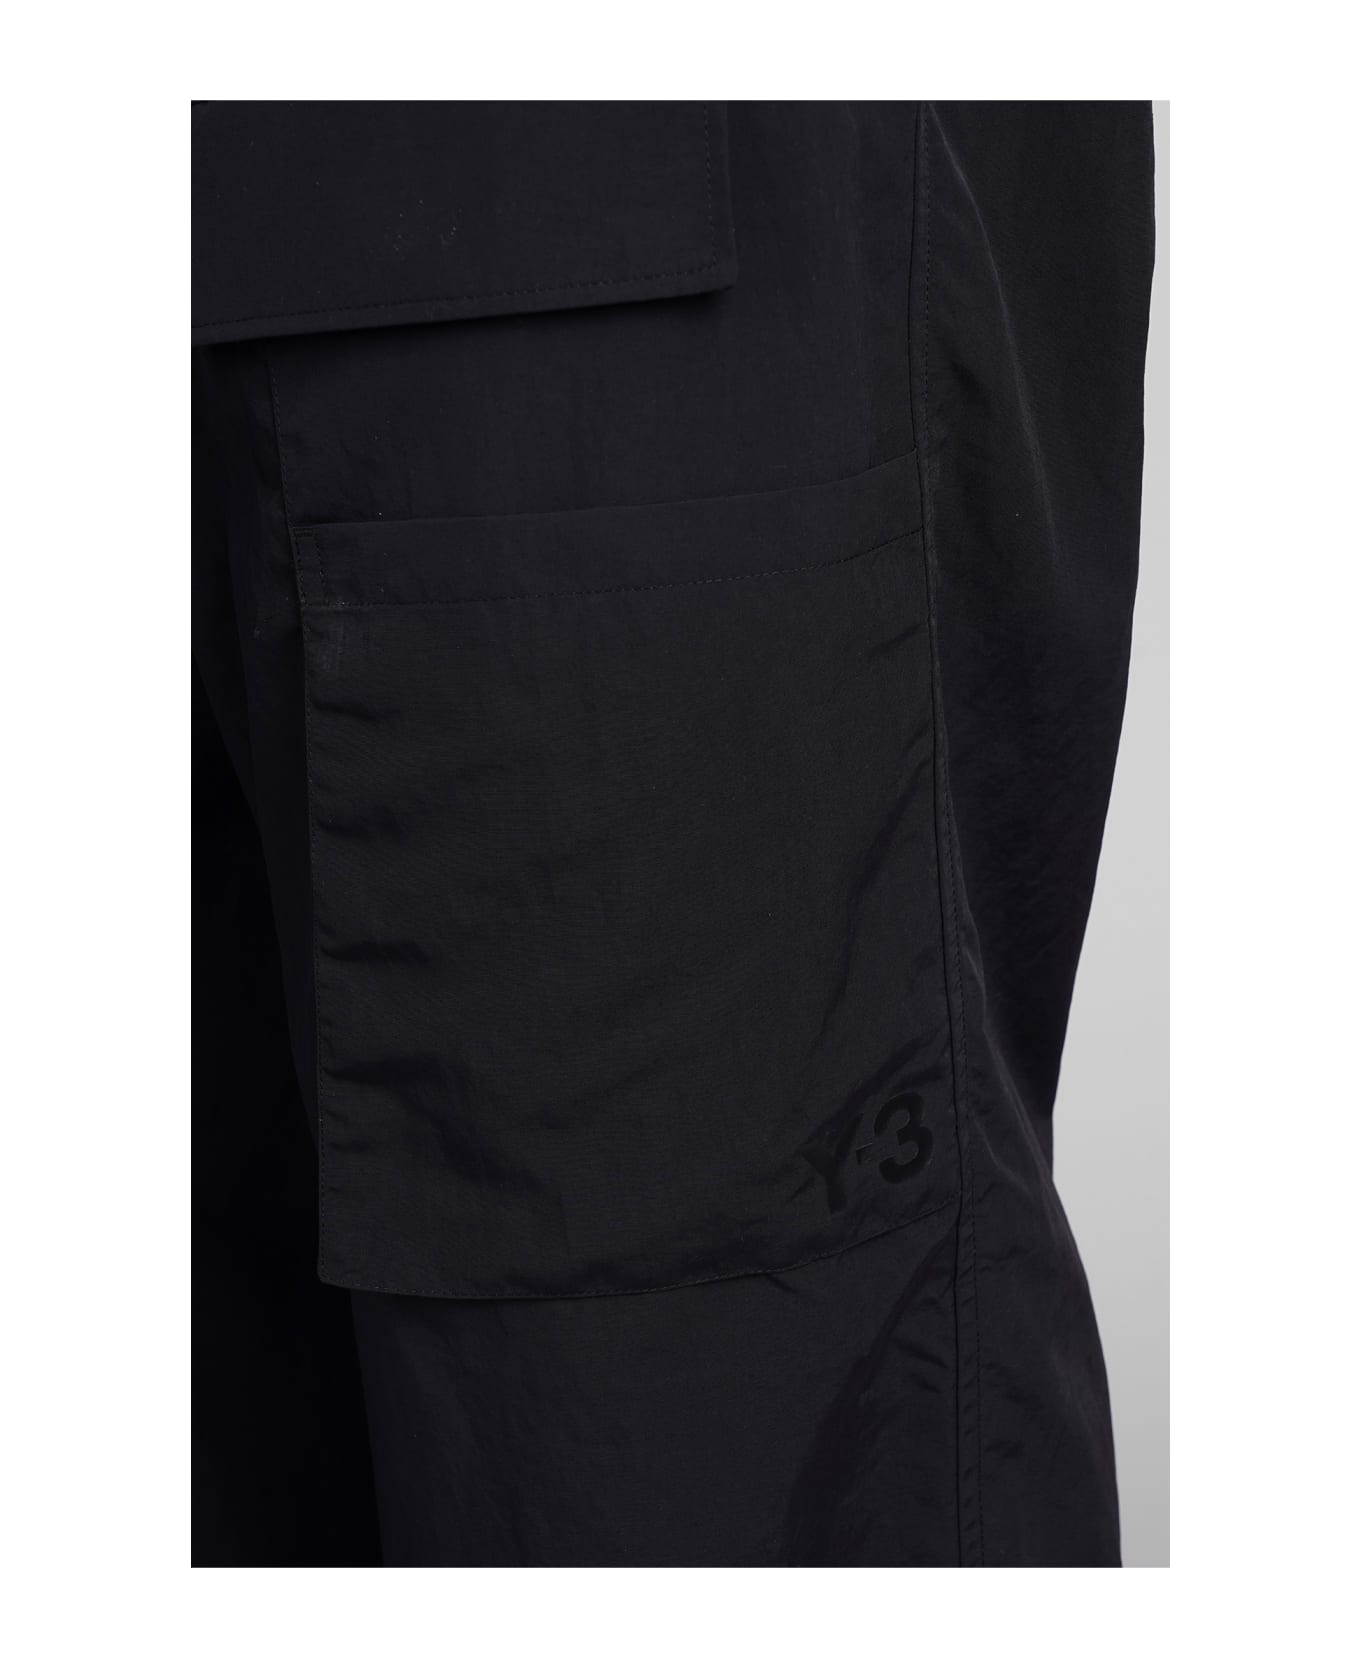 Y-3 Technical Fabric Pants - Black